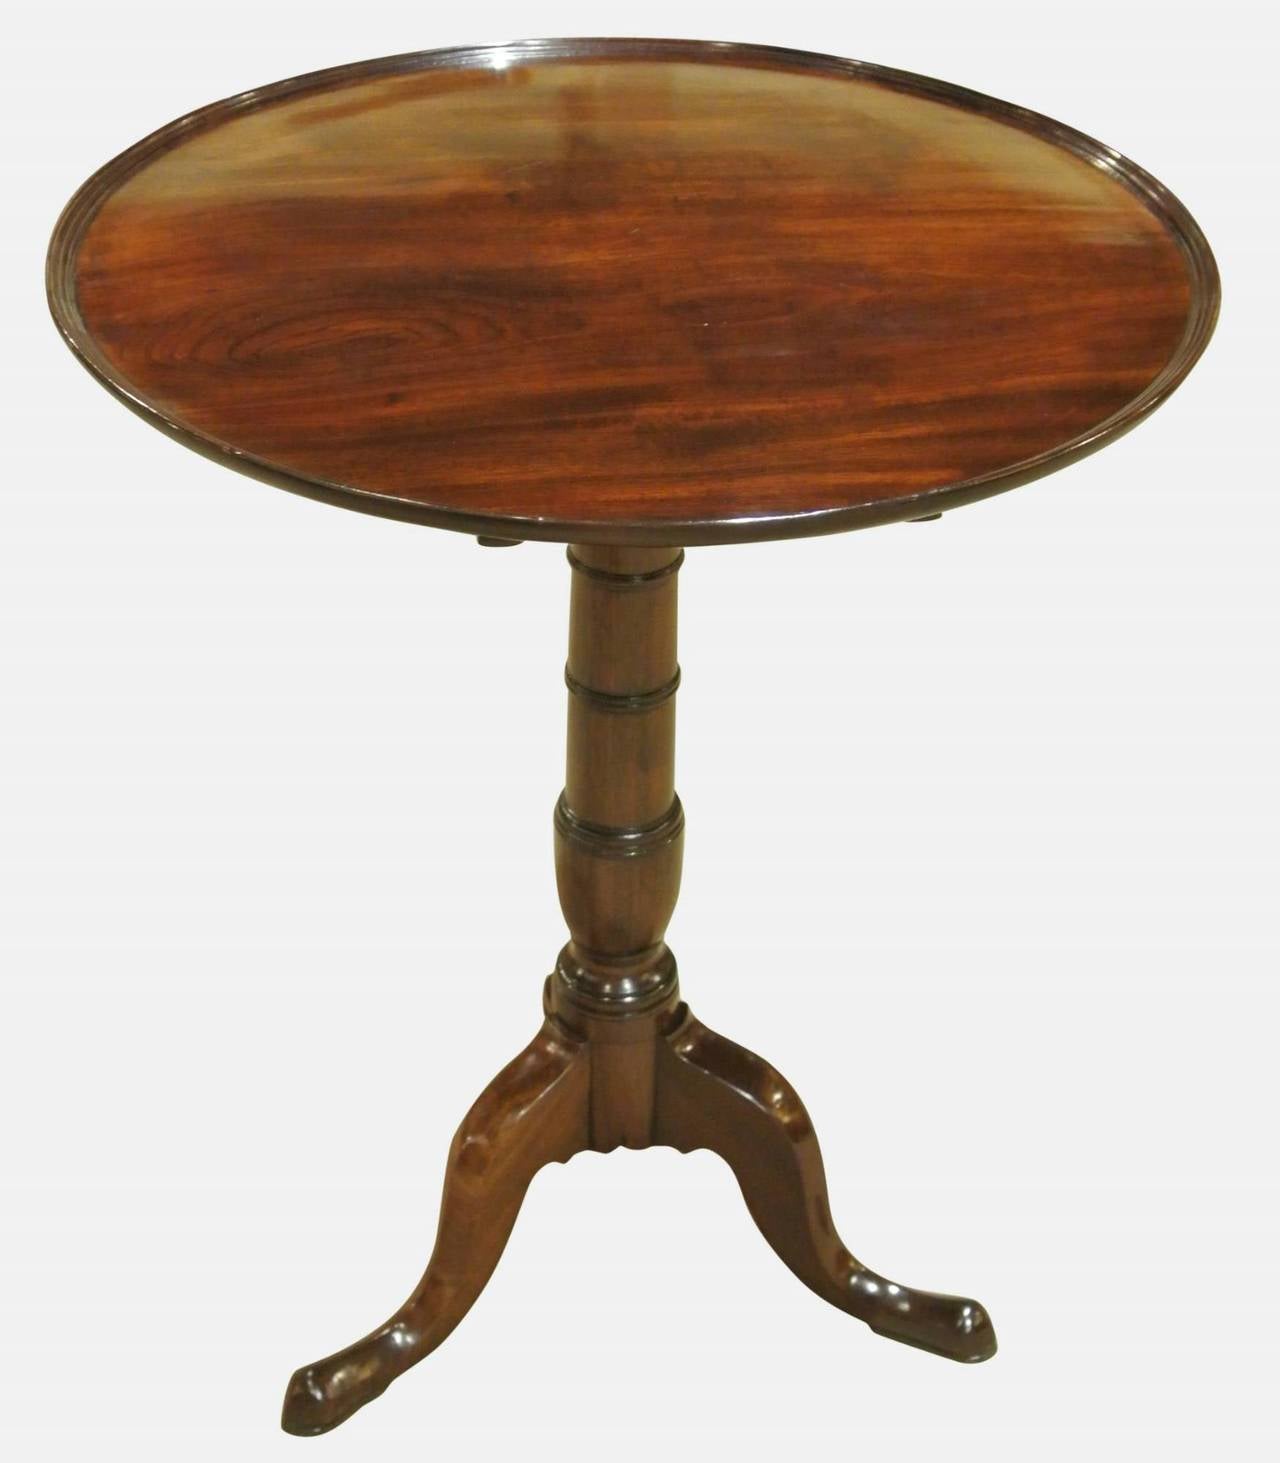 A very fine Georgian mahogany tilting dish top wine table on a turned gun barrel stem with tripod base.